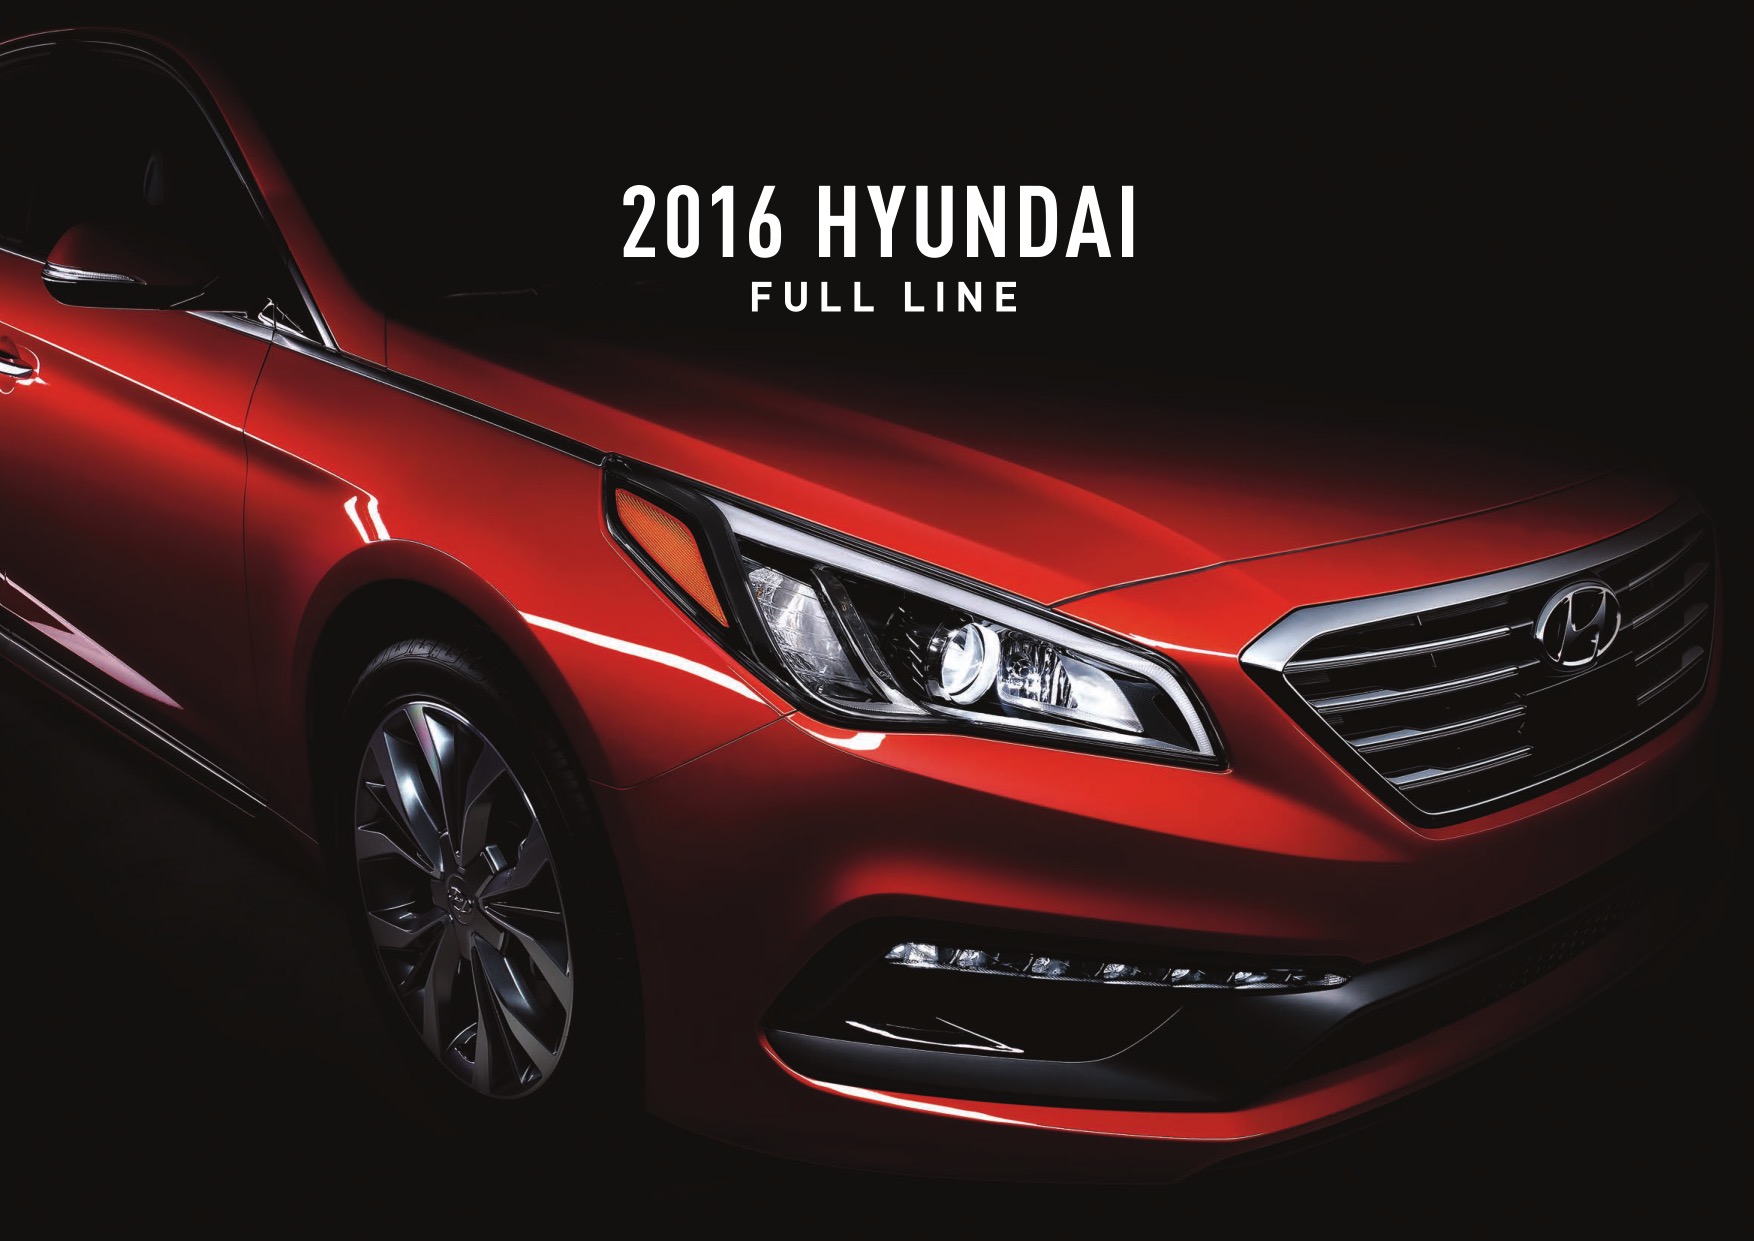 2016 Hyundai Full-Line